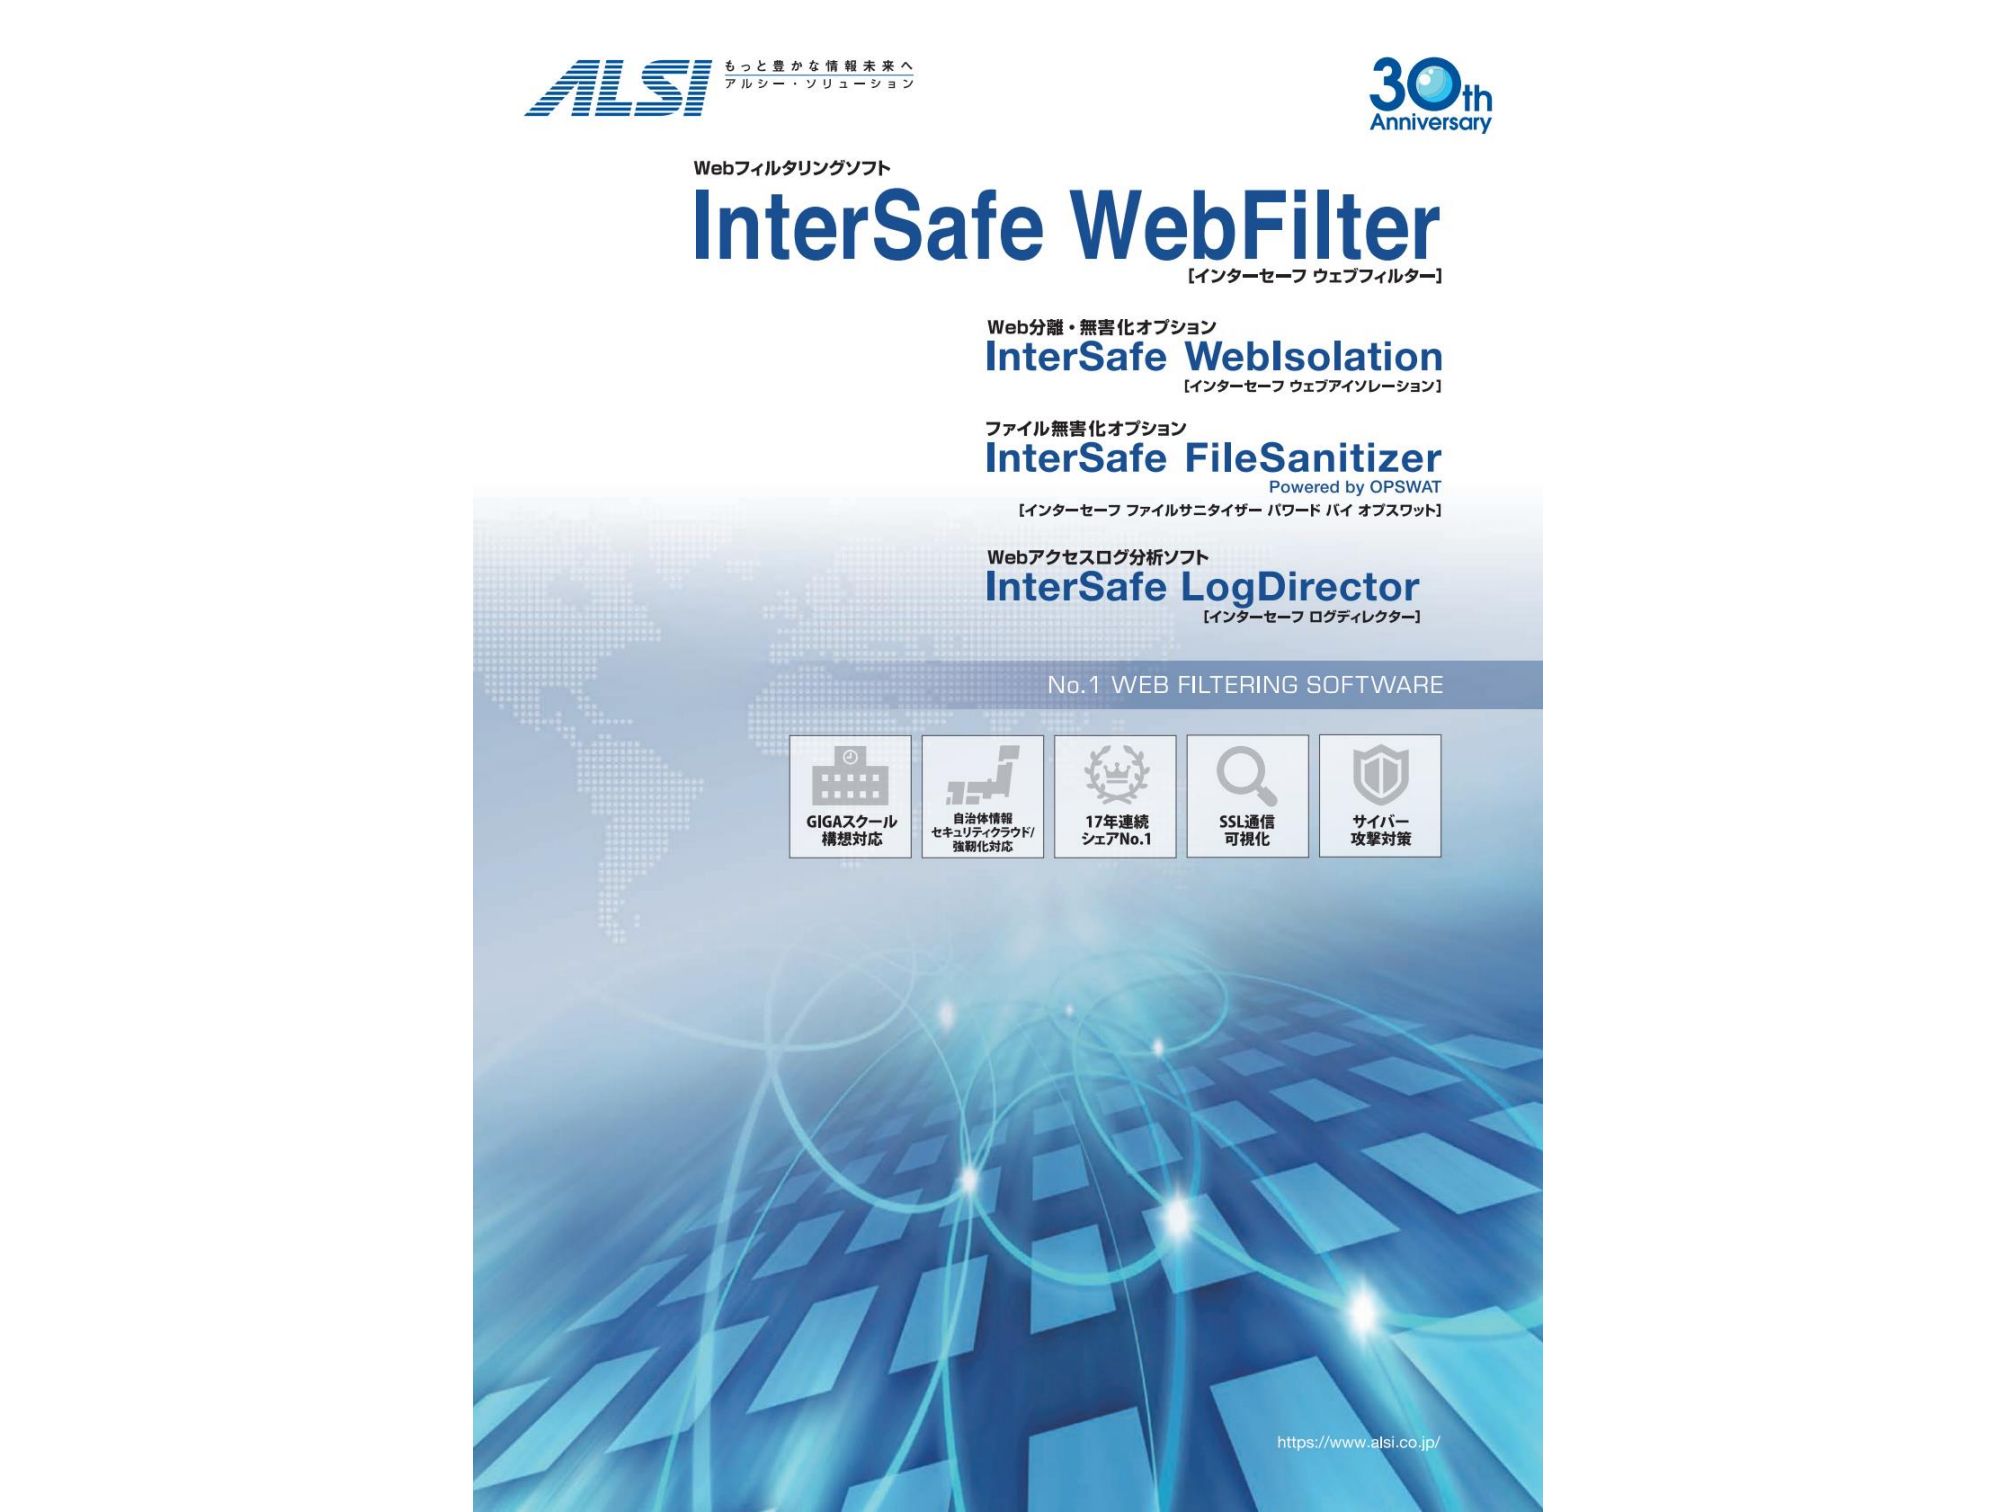 InterSafe LogDirector
カタログ A4